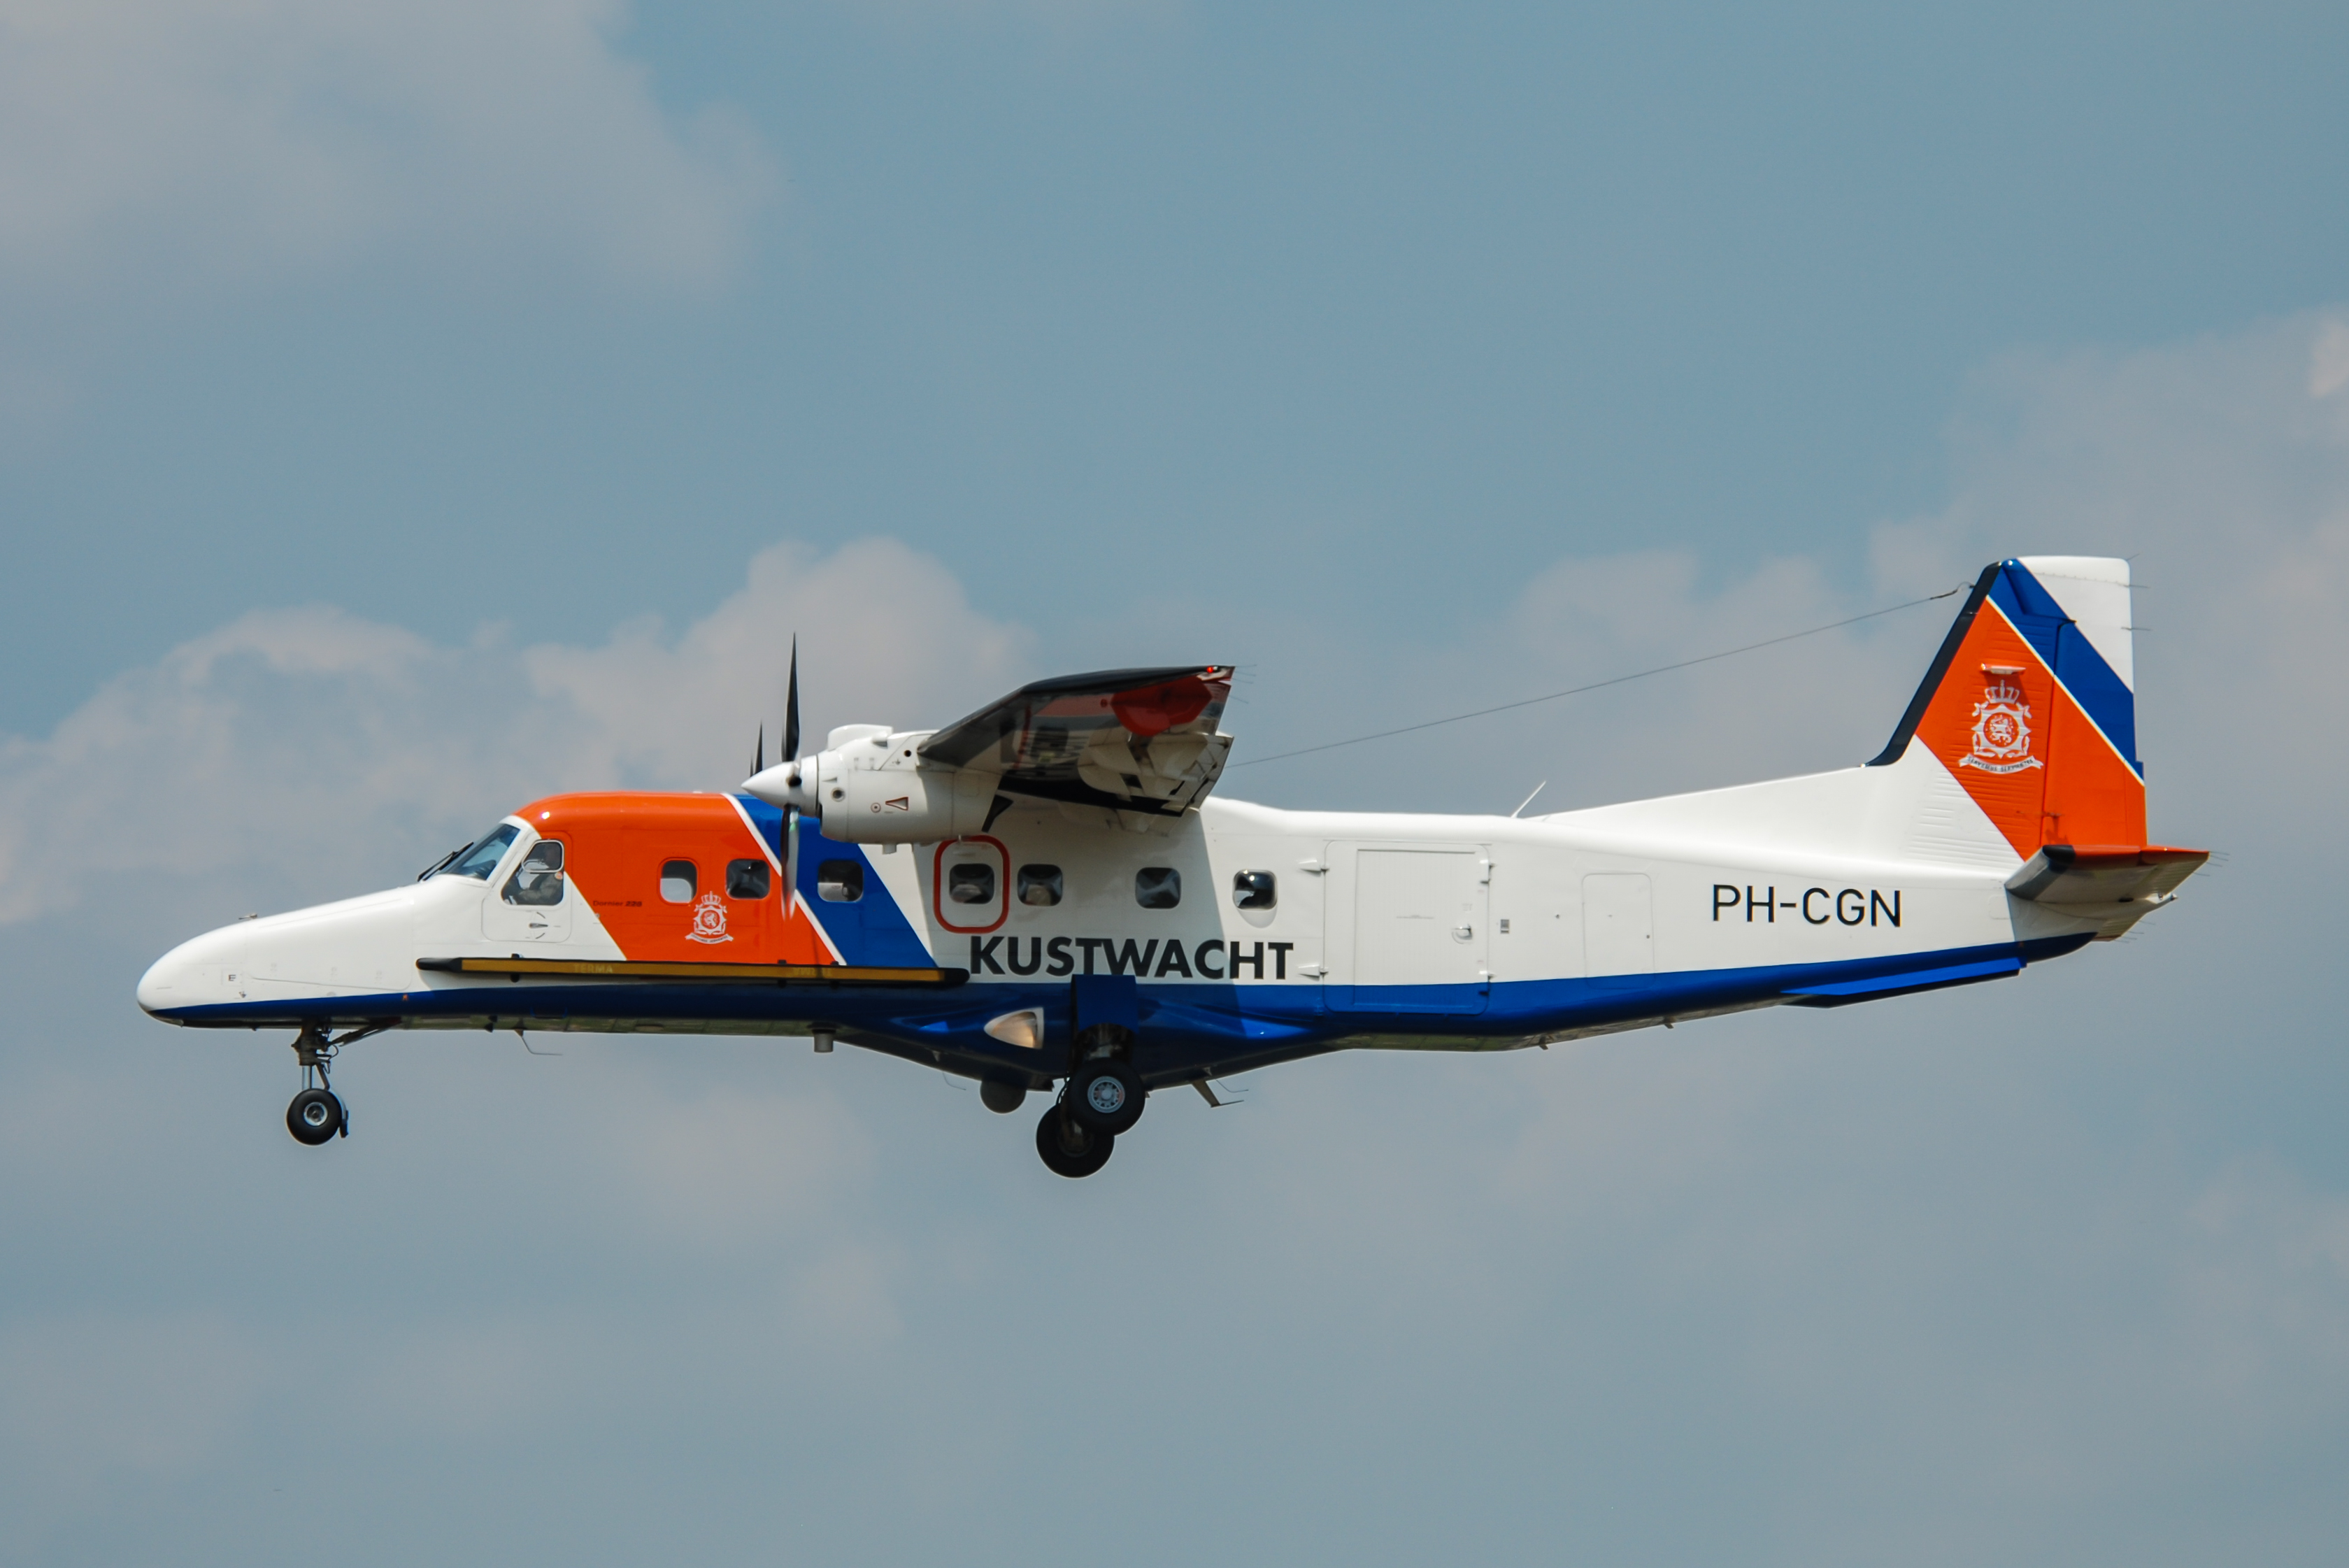 PH-CGN/PHCGN Netherlands Coast Guard Dornier 228 Airframe Information - AVSpotters.com